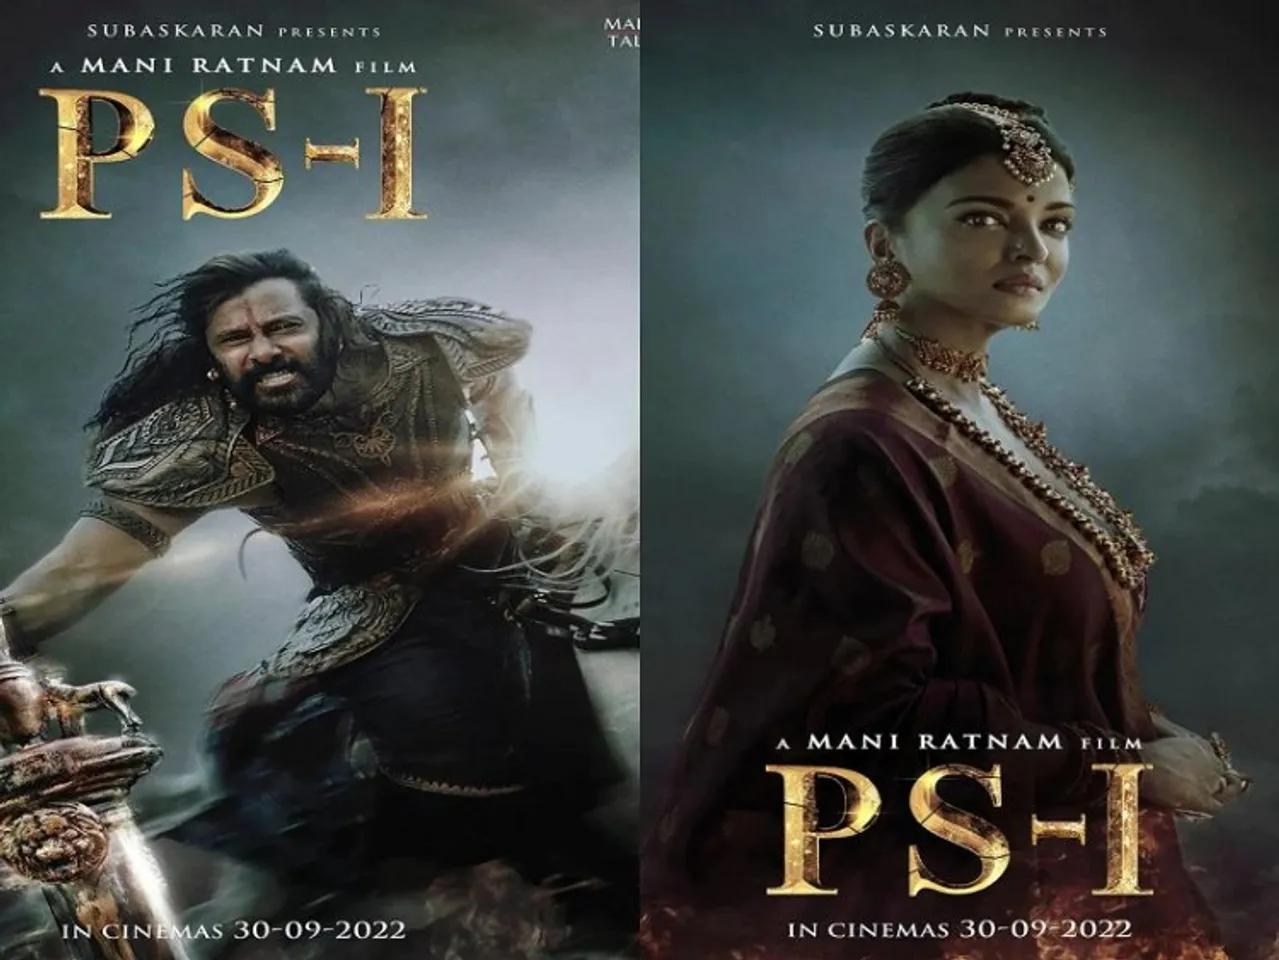 Aishwarya Rai Bachchan is 'vengeance' in 'Ponniyin Selvan - 1' new poster